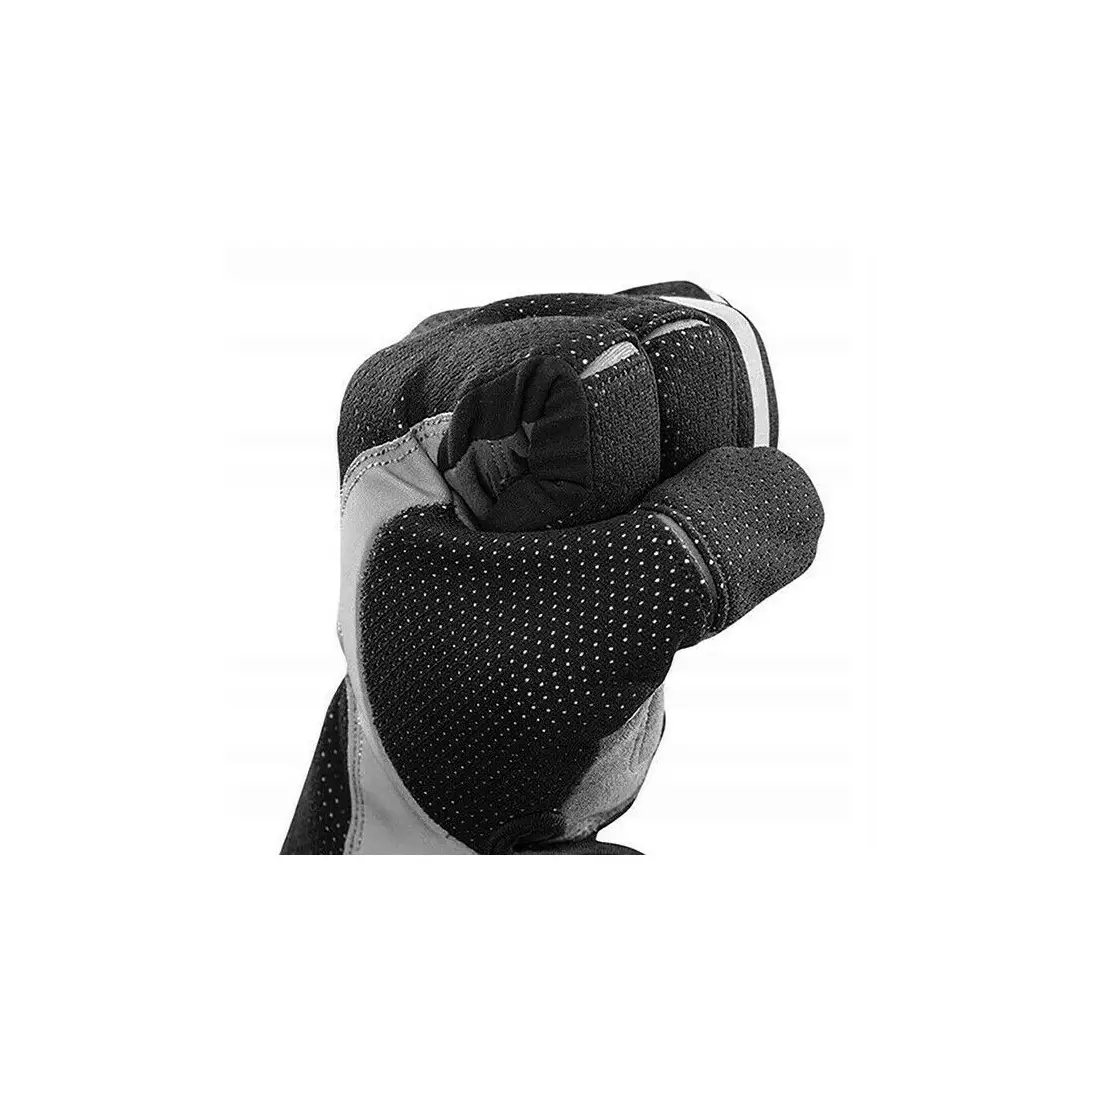 Rockbros Übergangs-Fahrradhandschuhe, Membran, schwarz grau S173BGR